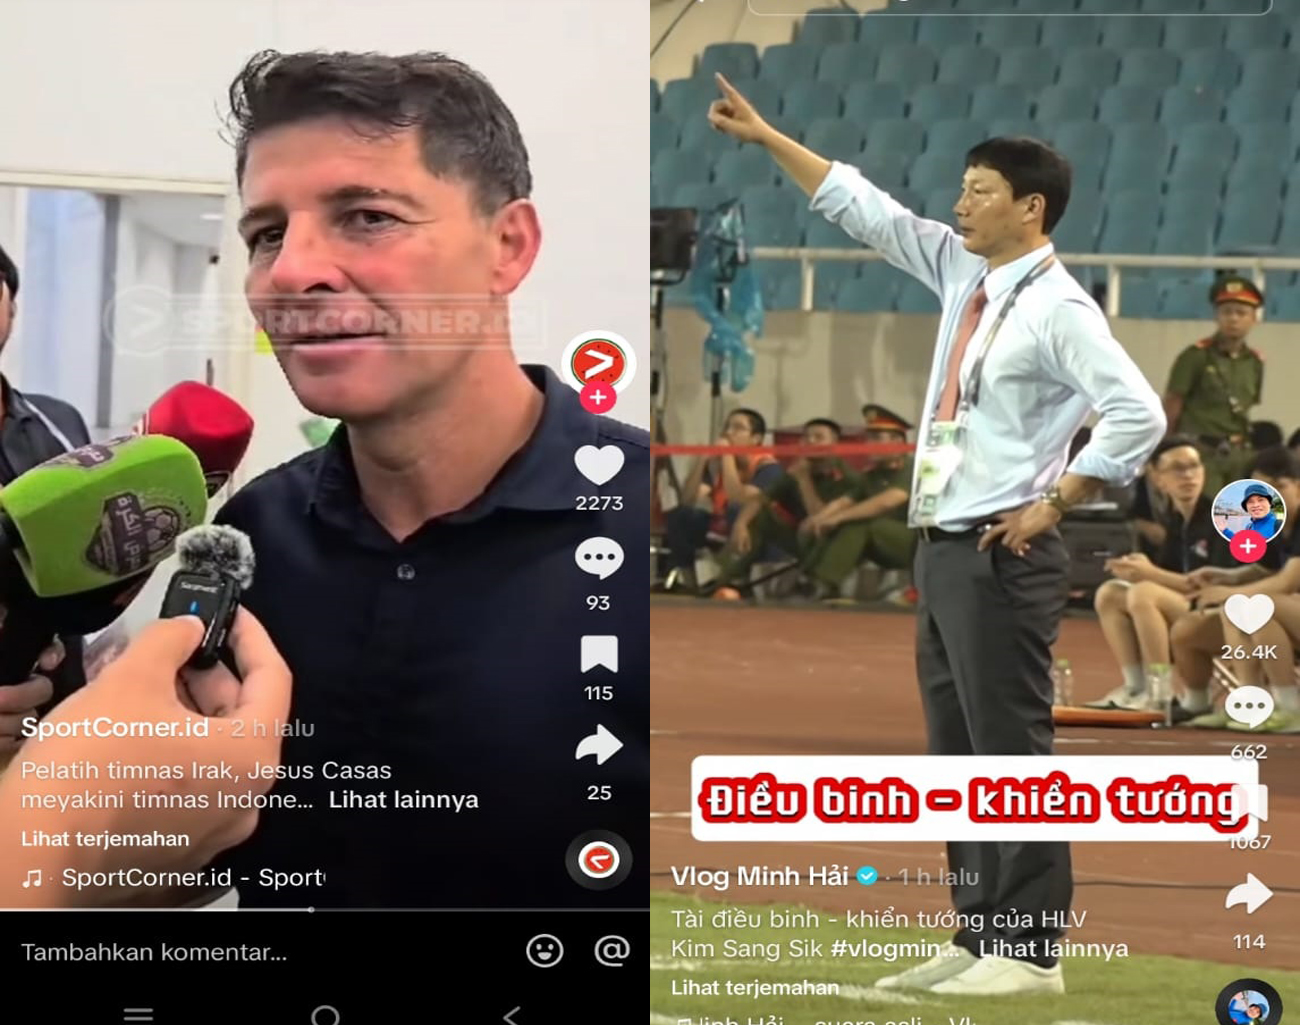 Pelatih Irak: Tidak Ada Main Mata dengan Vietnam, Timnas Irak Main Fair Play, Kualifikasi Piala Dunia 2026 